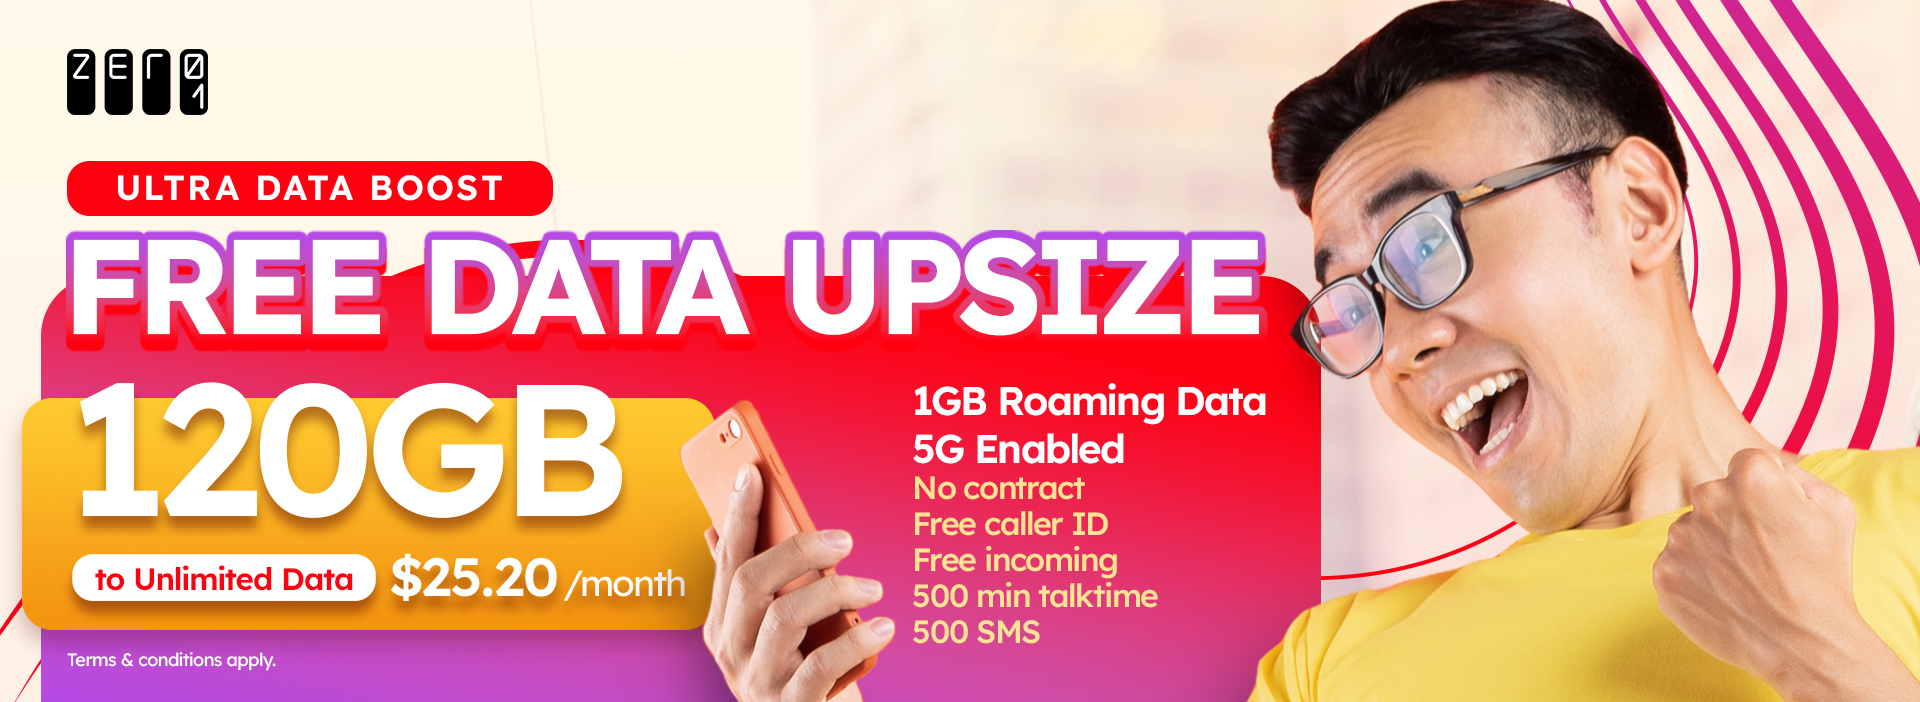 Ultra Data Boost - Zero1 60u 5G 120GB Mobile Plan - Let's Zero™ in